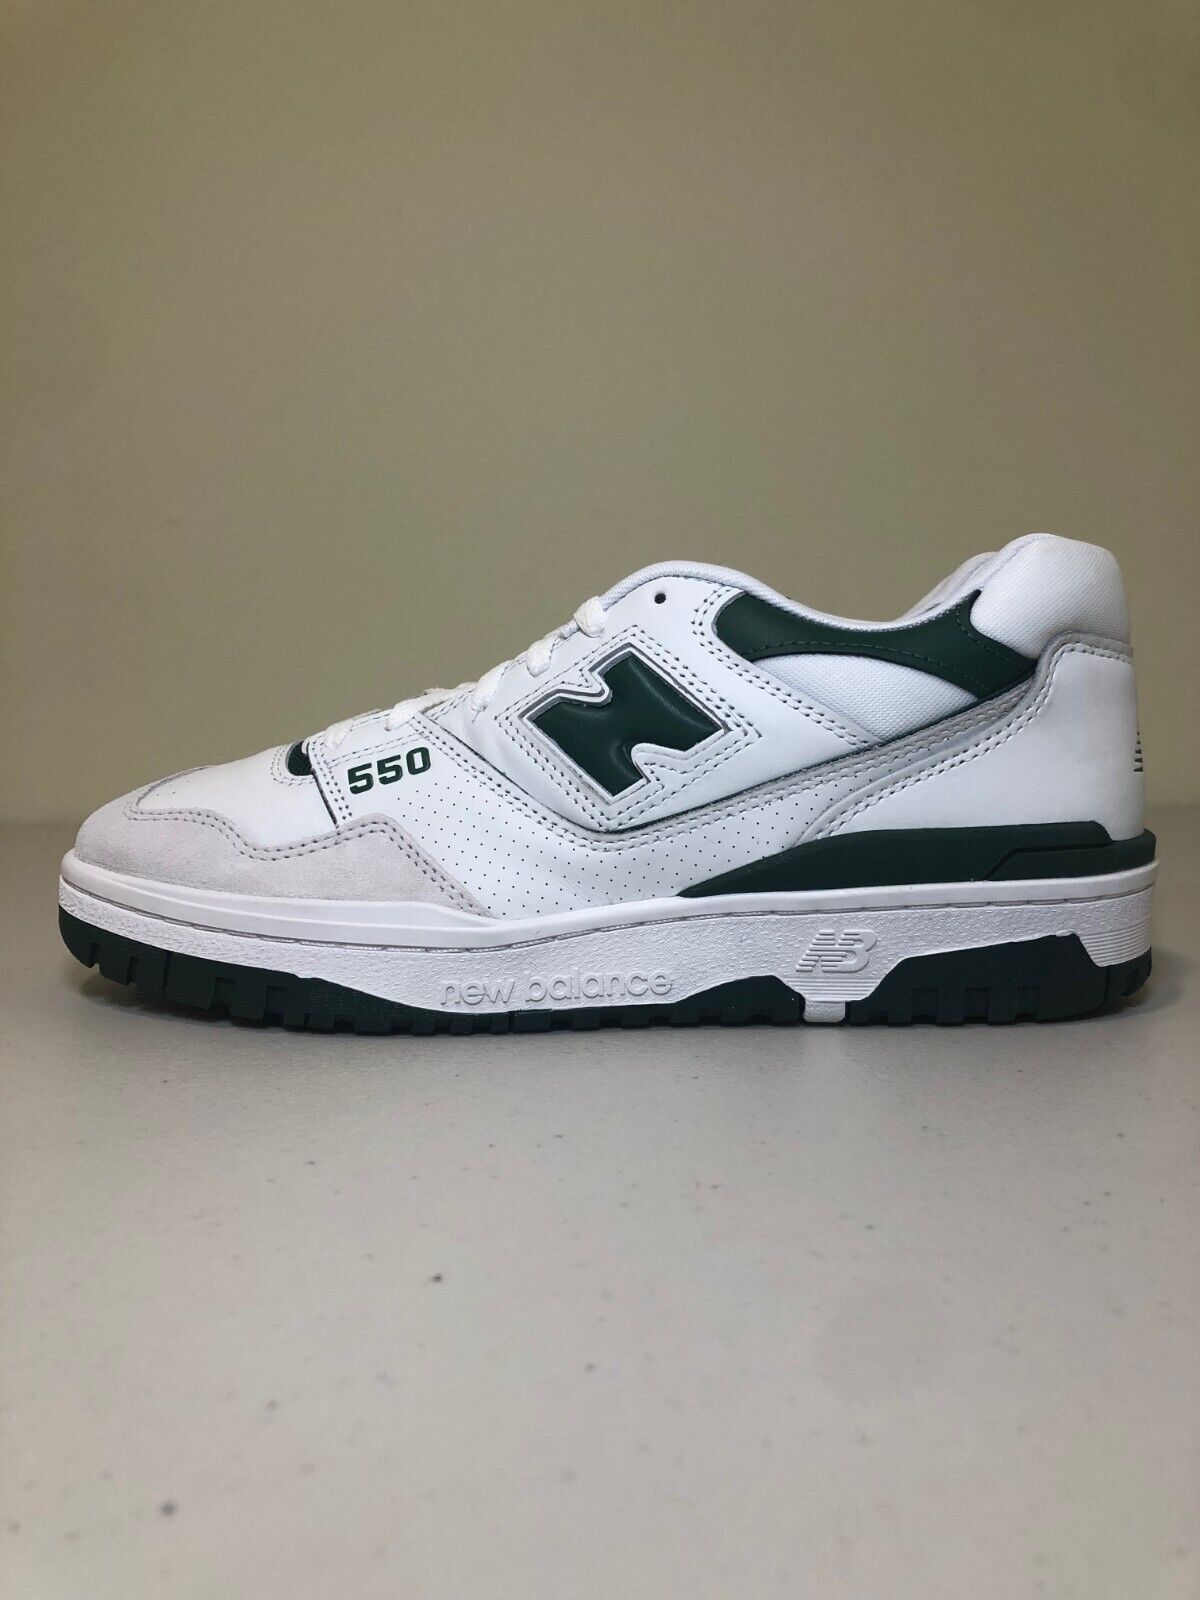 New Balance 550 White Green - 3